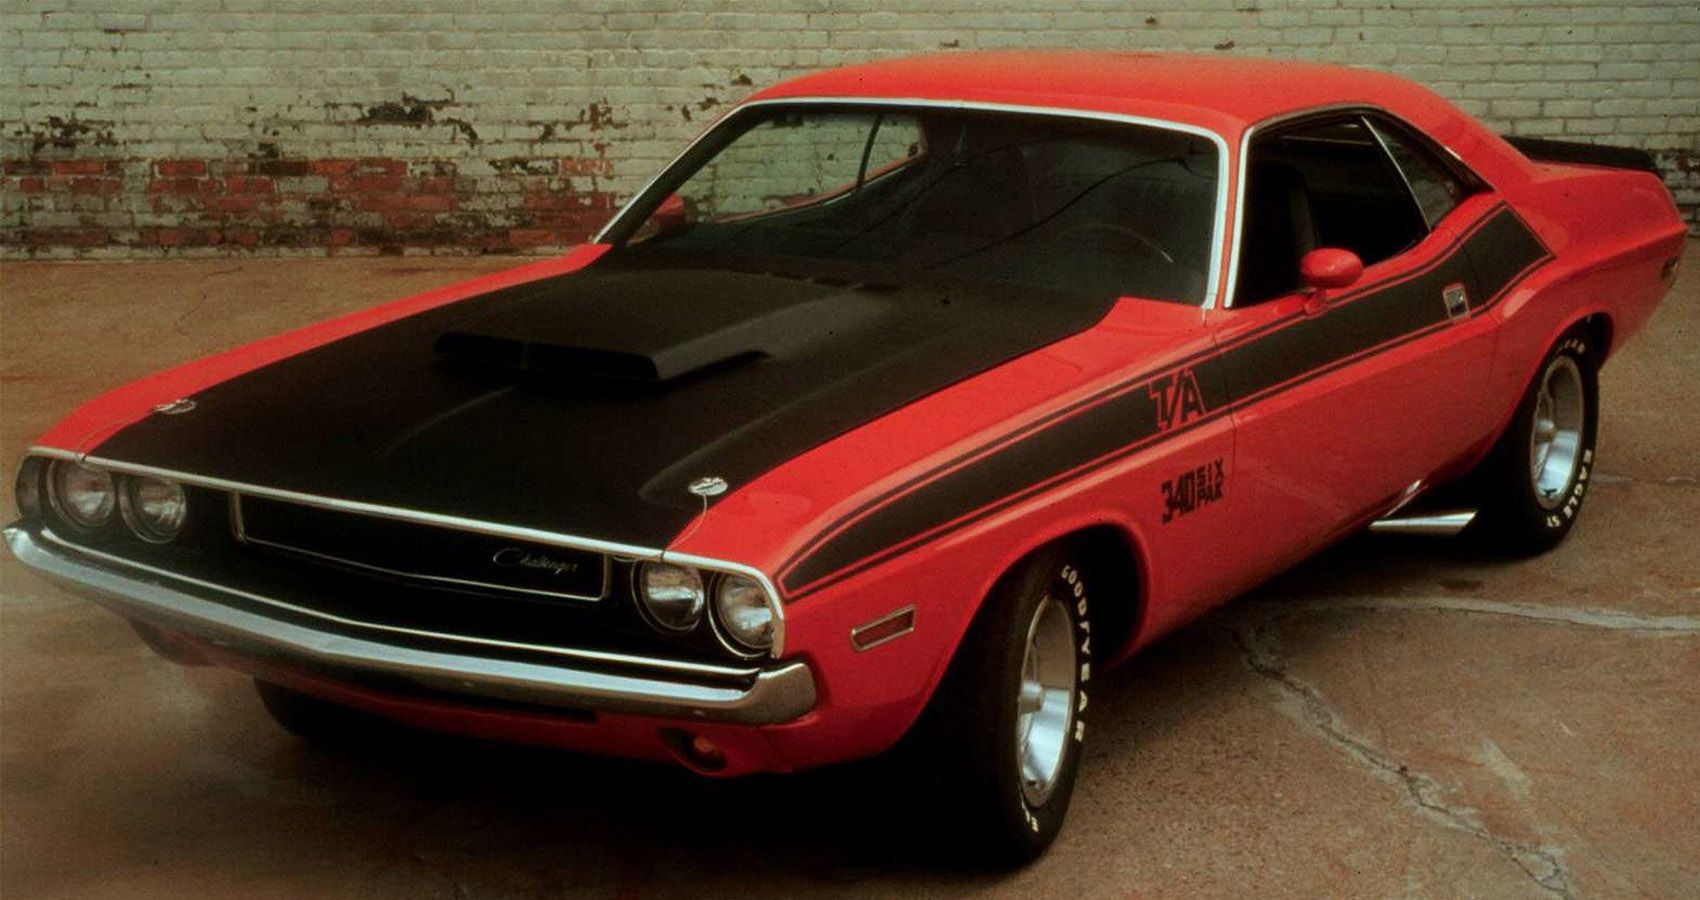 1970 Dodge Challenger T:A Orange Front View